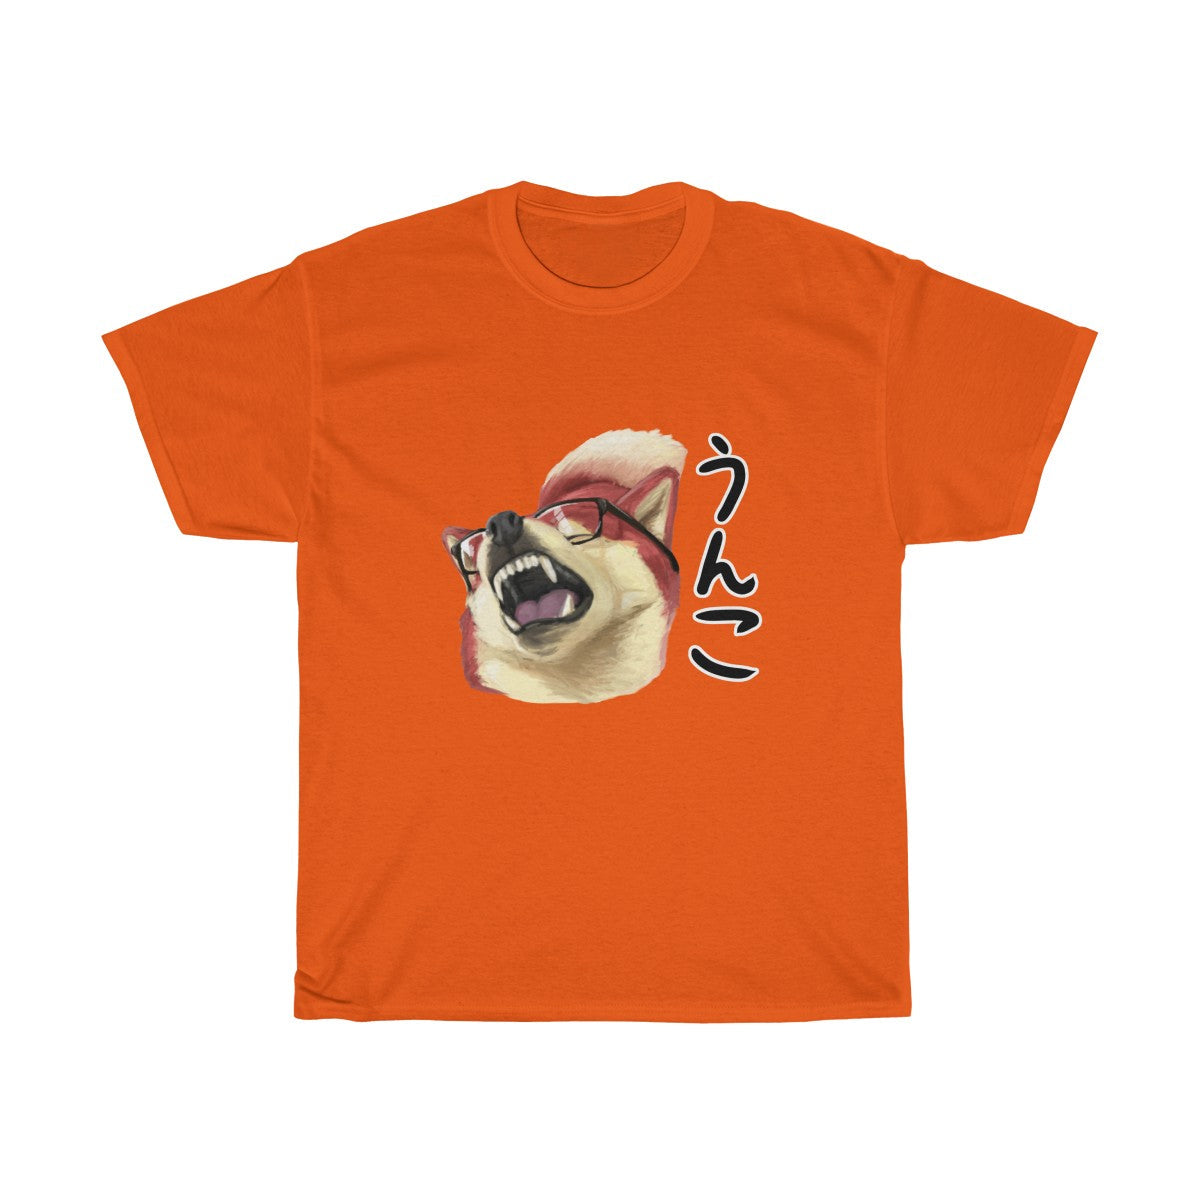 Unko - T-Shirt T-Shirt Ooka Orange S 